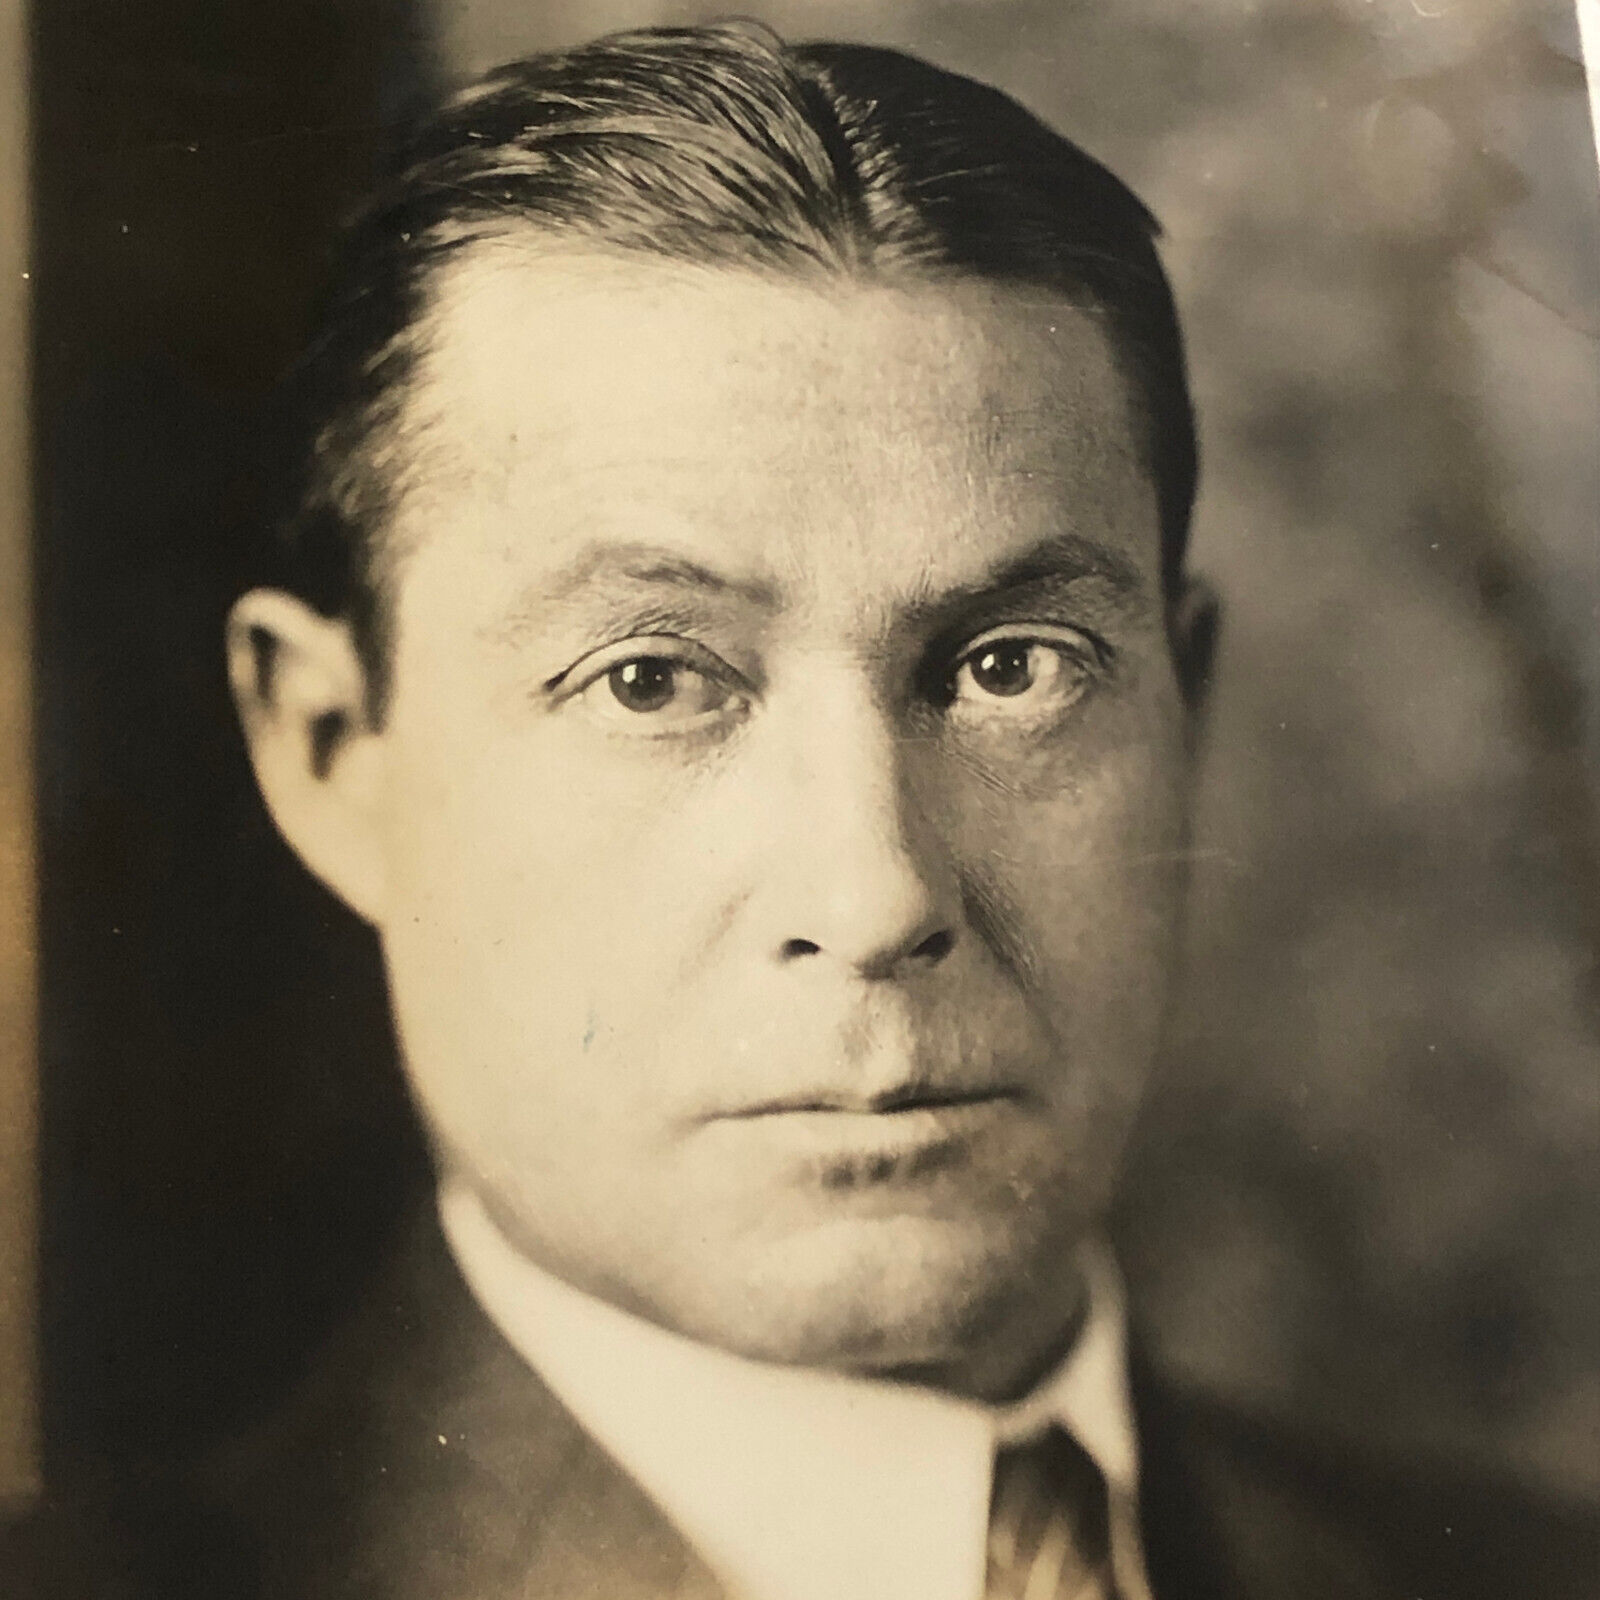 Press Photo Photograph Ambassador to Estonia Latvia Lithuania 1933 Underwood